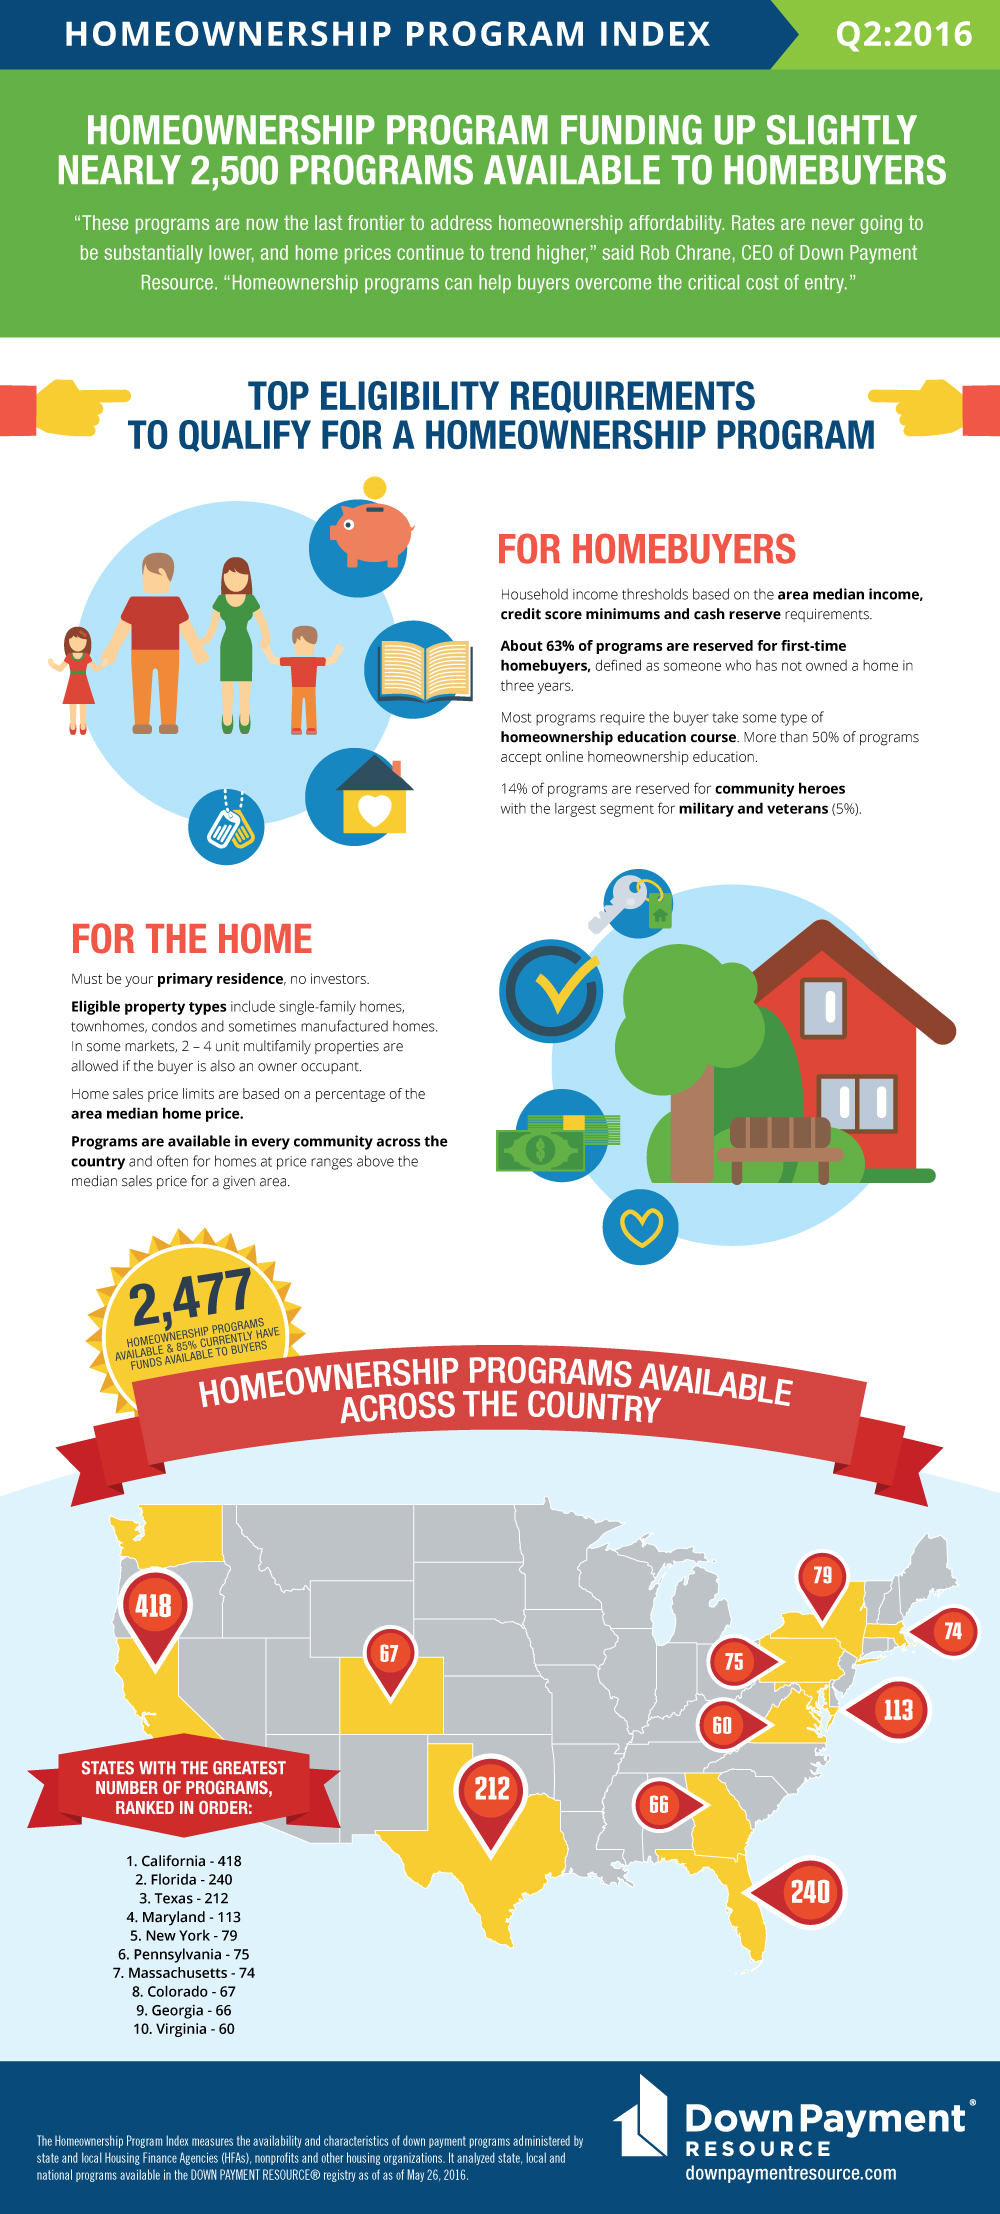 Down Payment Resource - Q2 Homeownership Program Index